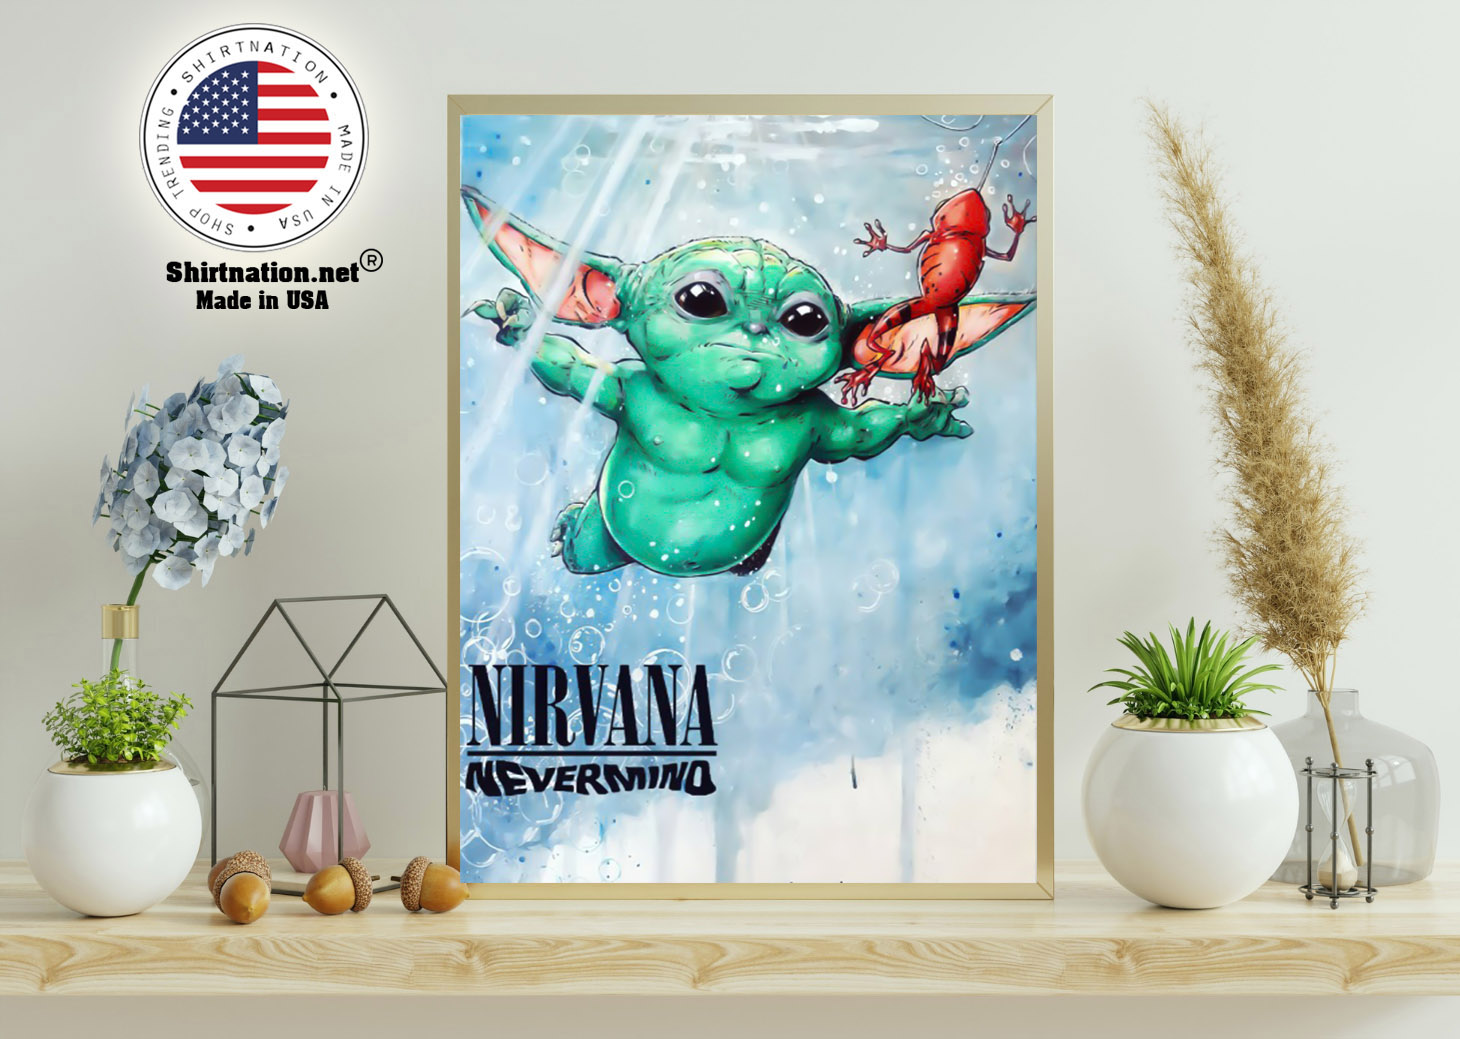 Baby Yoda nirvana never mind poster 11